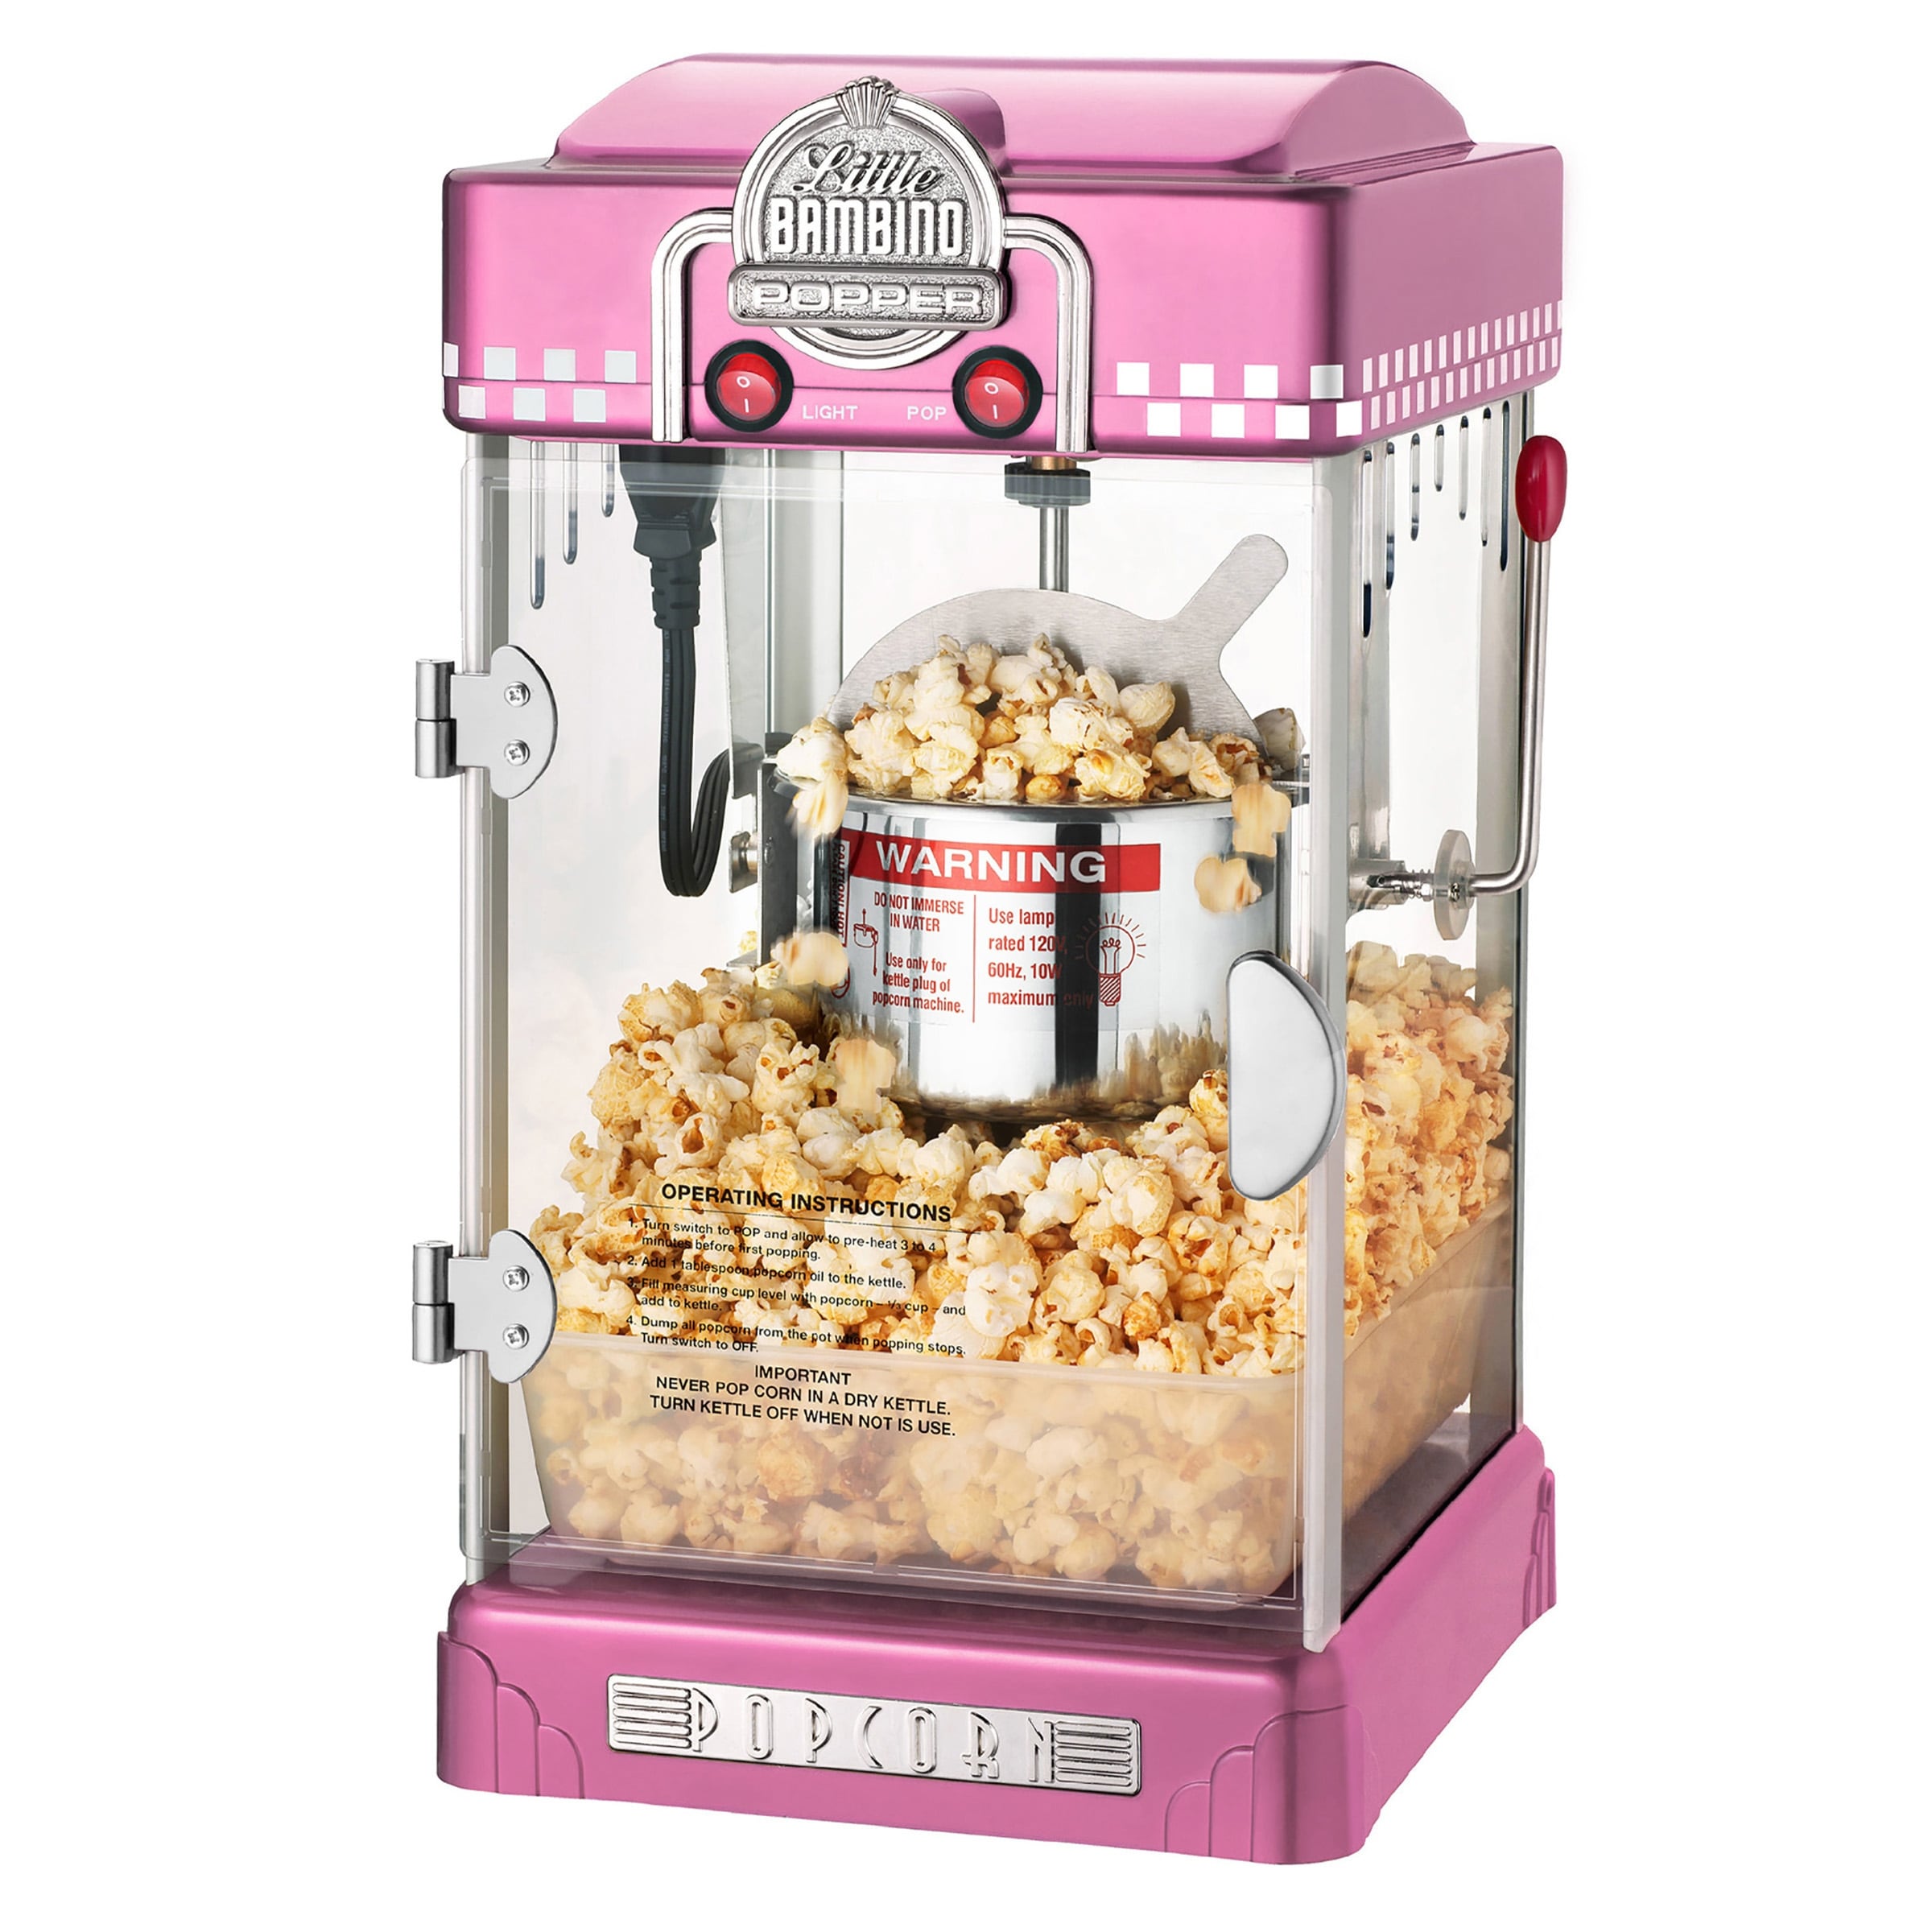 Cuisinart CPM-700 Popcorn Maker - Grey/Red for sale online